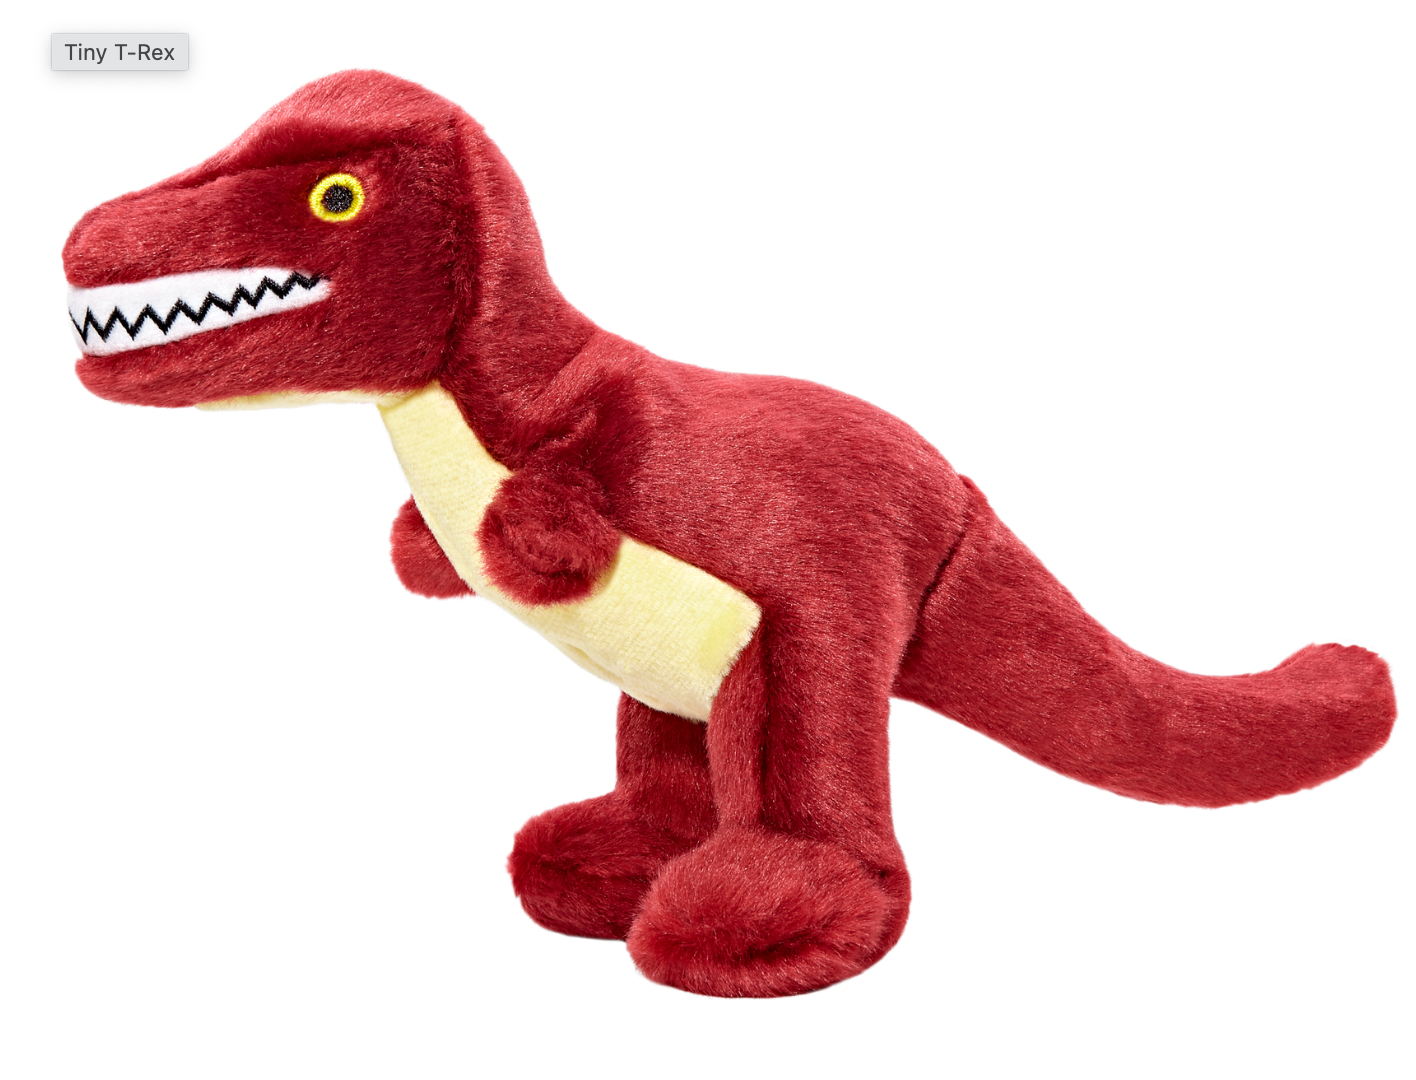 Fluff & Tuff "Tiny T-Rex" Squeaky Plush Dog Toy